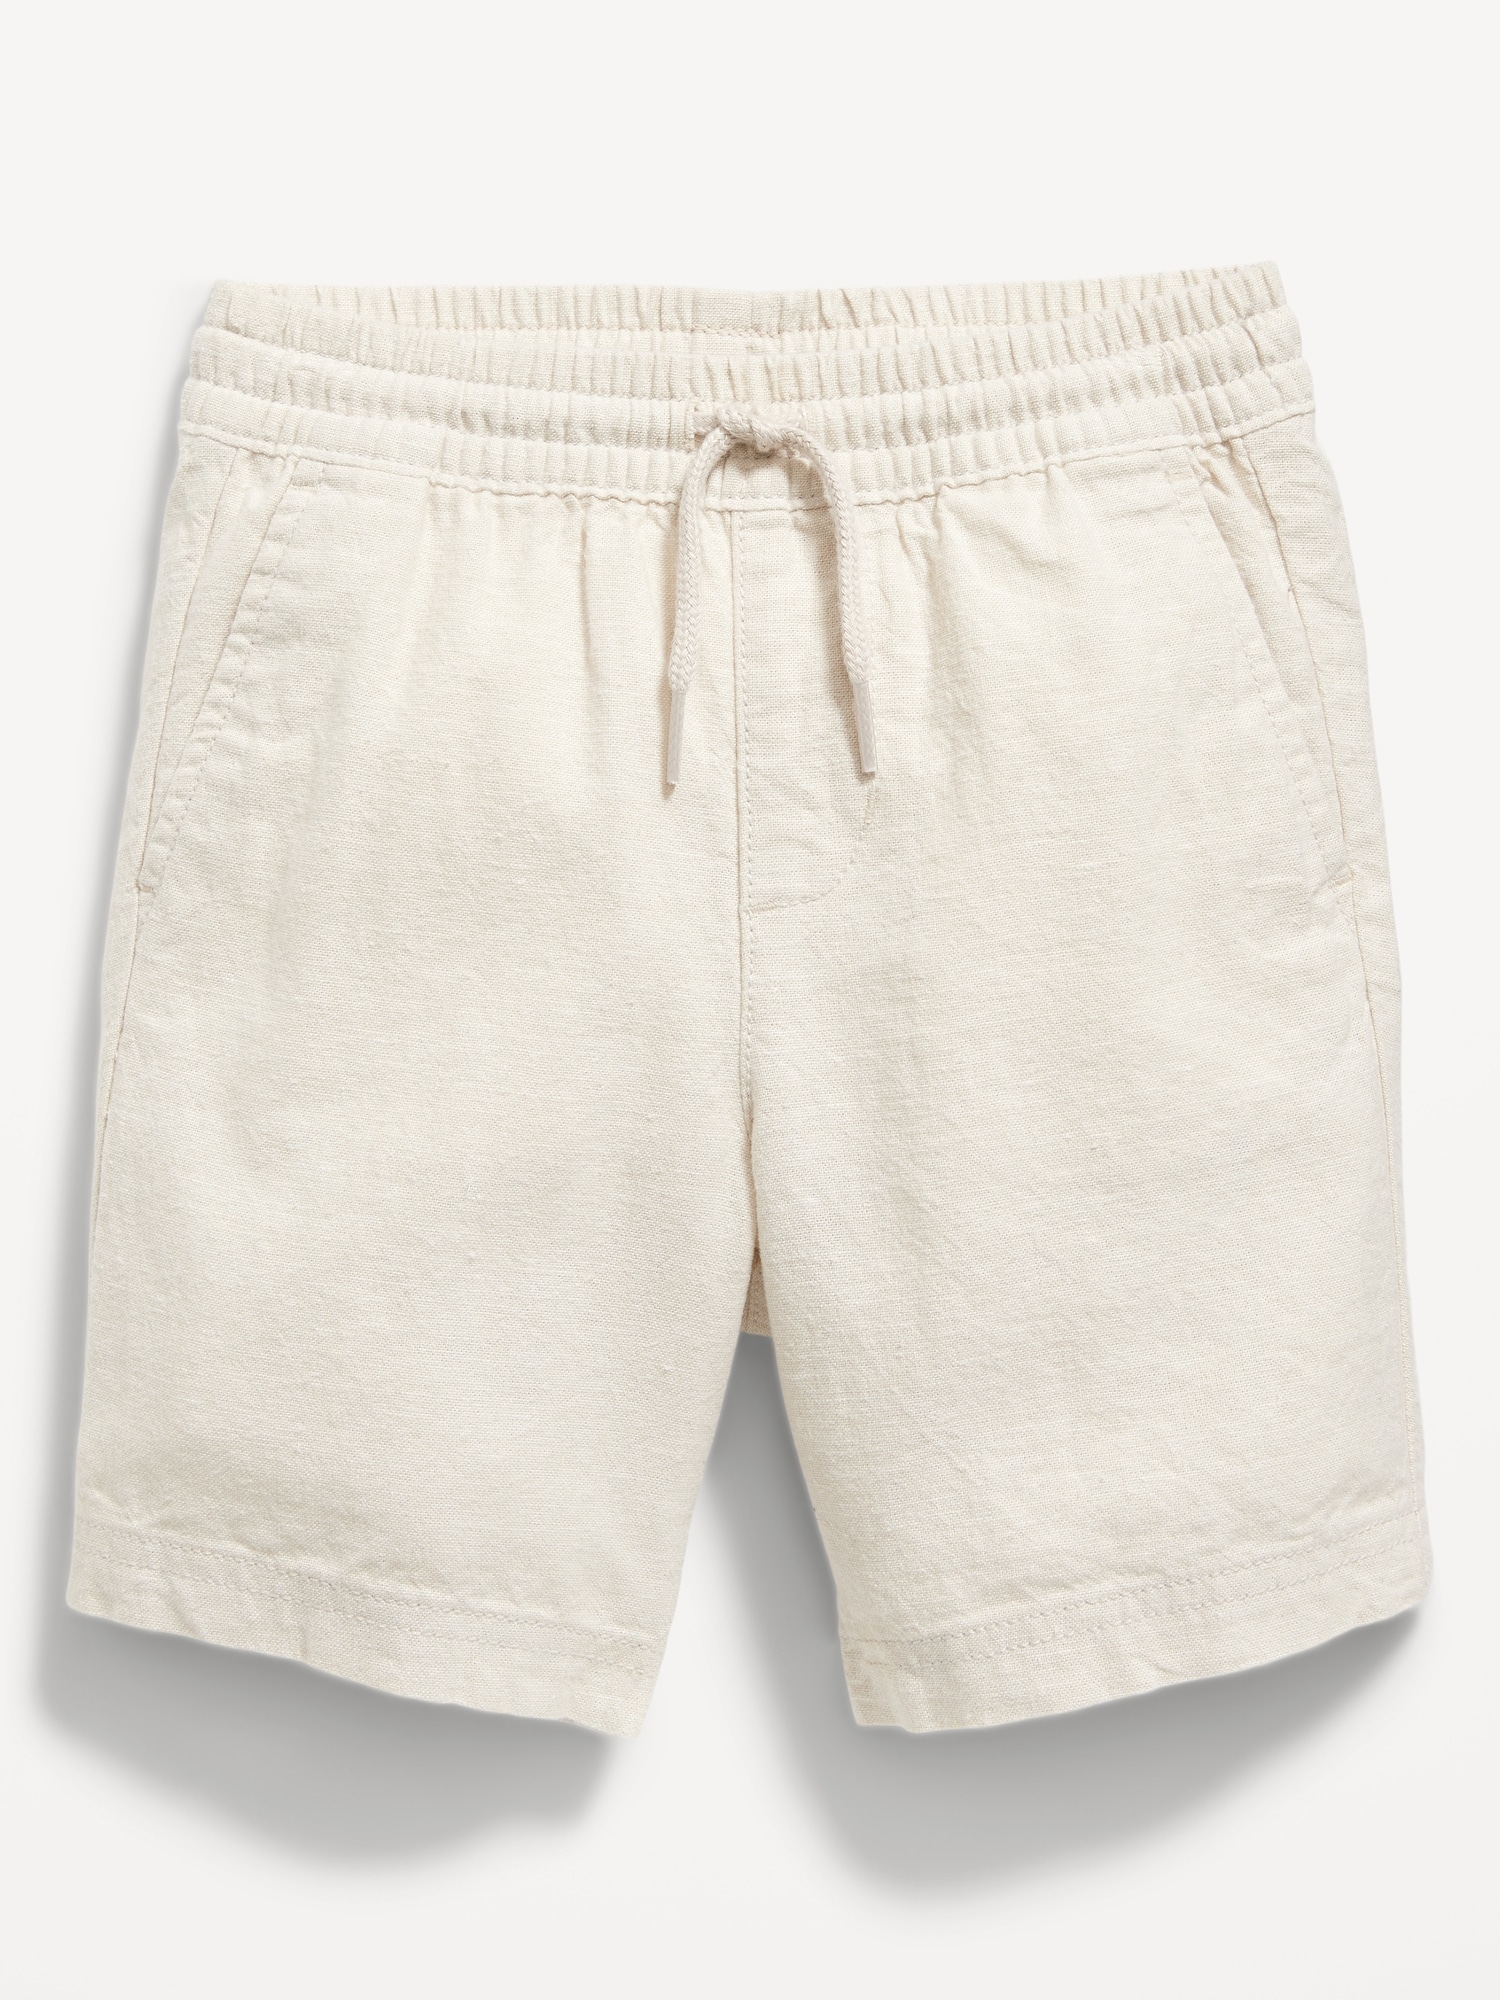 Functional-Drawstring Linen-Blend Shorts for Toddler Boys Hot Deal